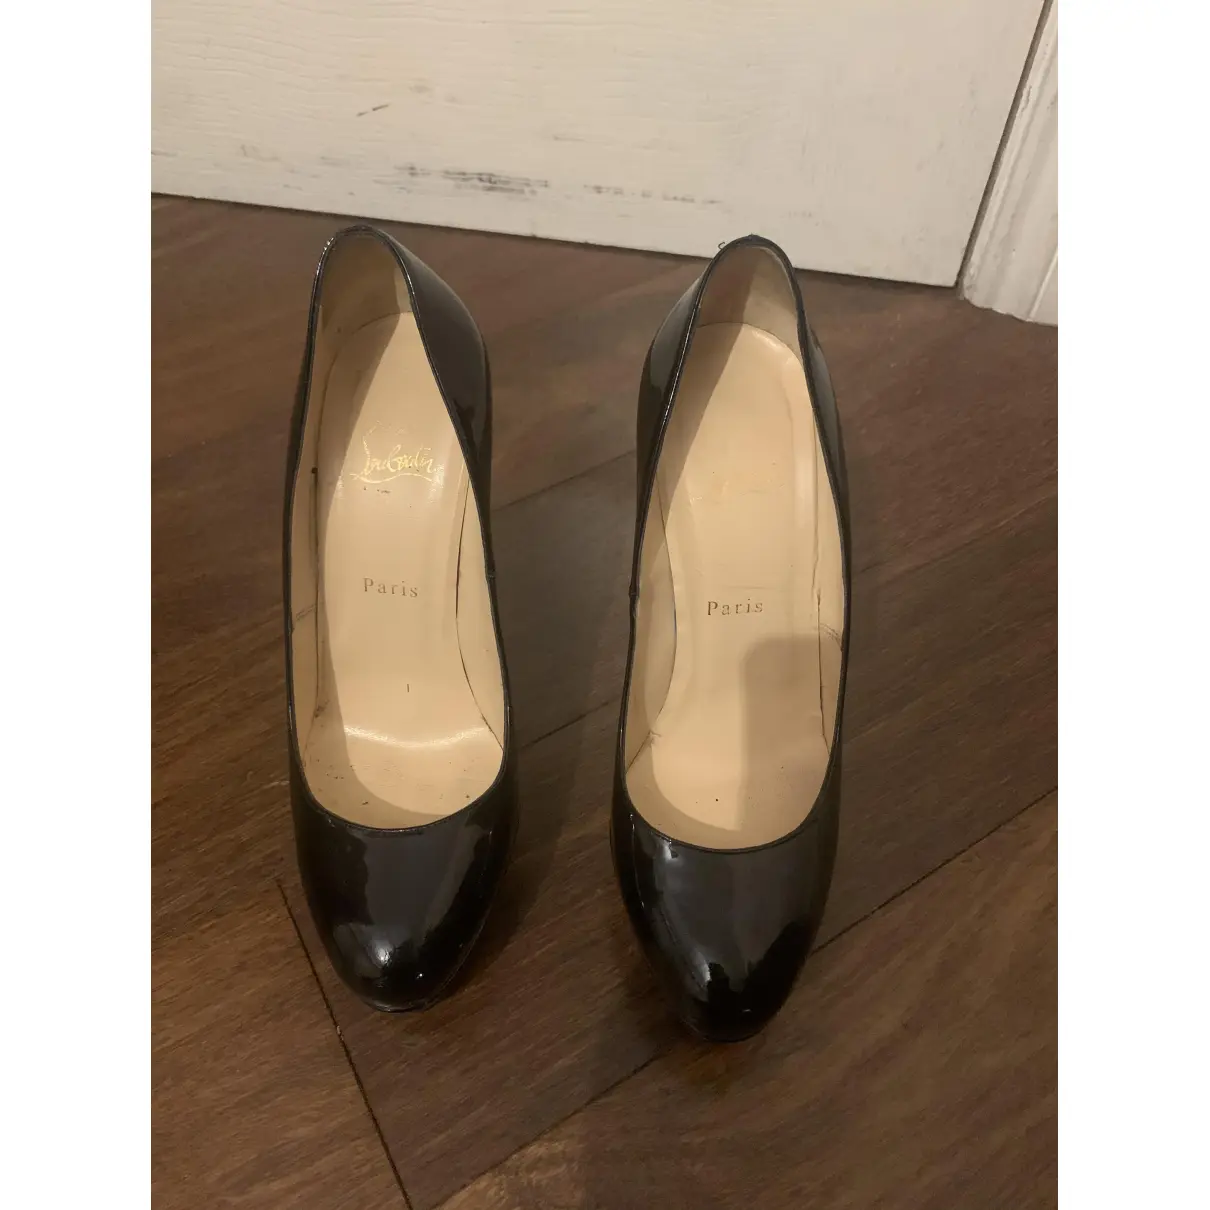 Buy Christian Louboutin Bianca leather heels online